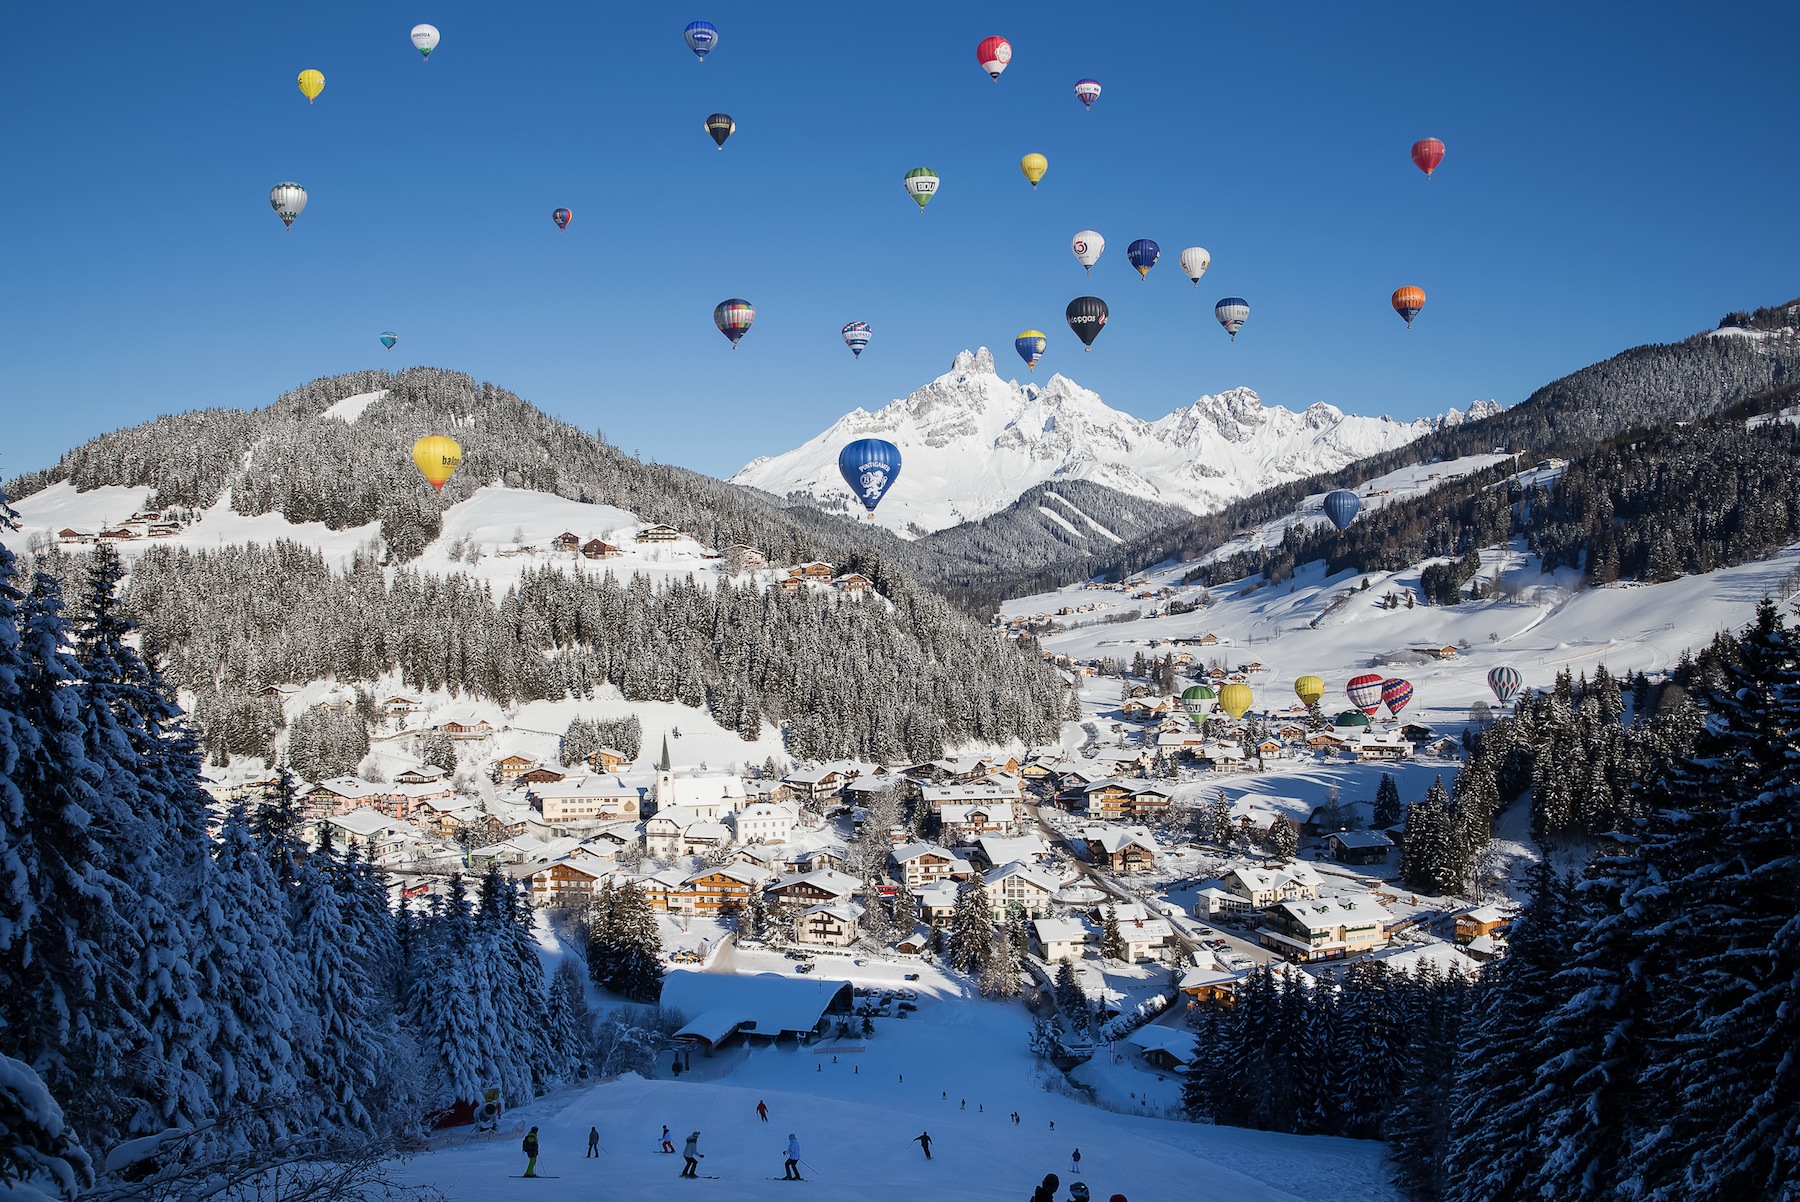 Ballonfahren bei den Heißluftballonwochen in Filzmoos